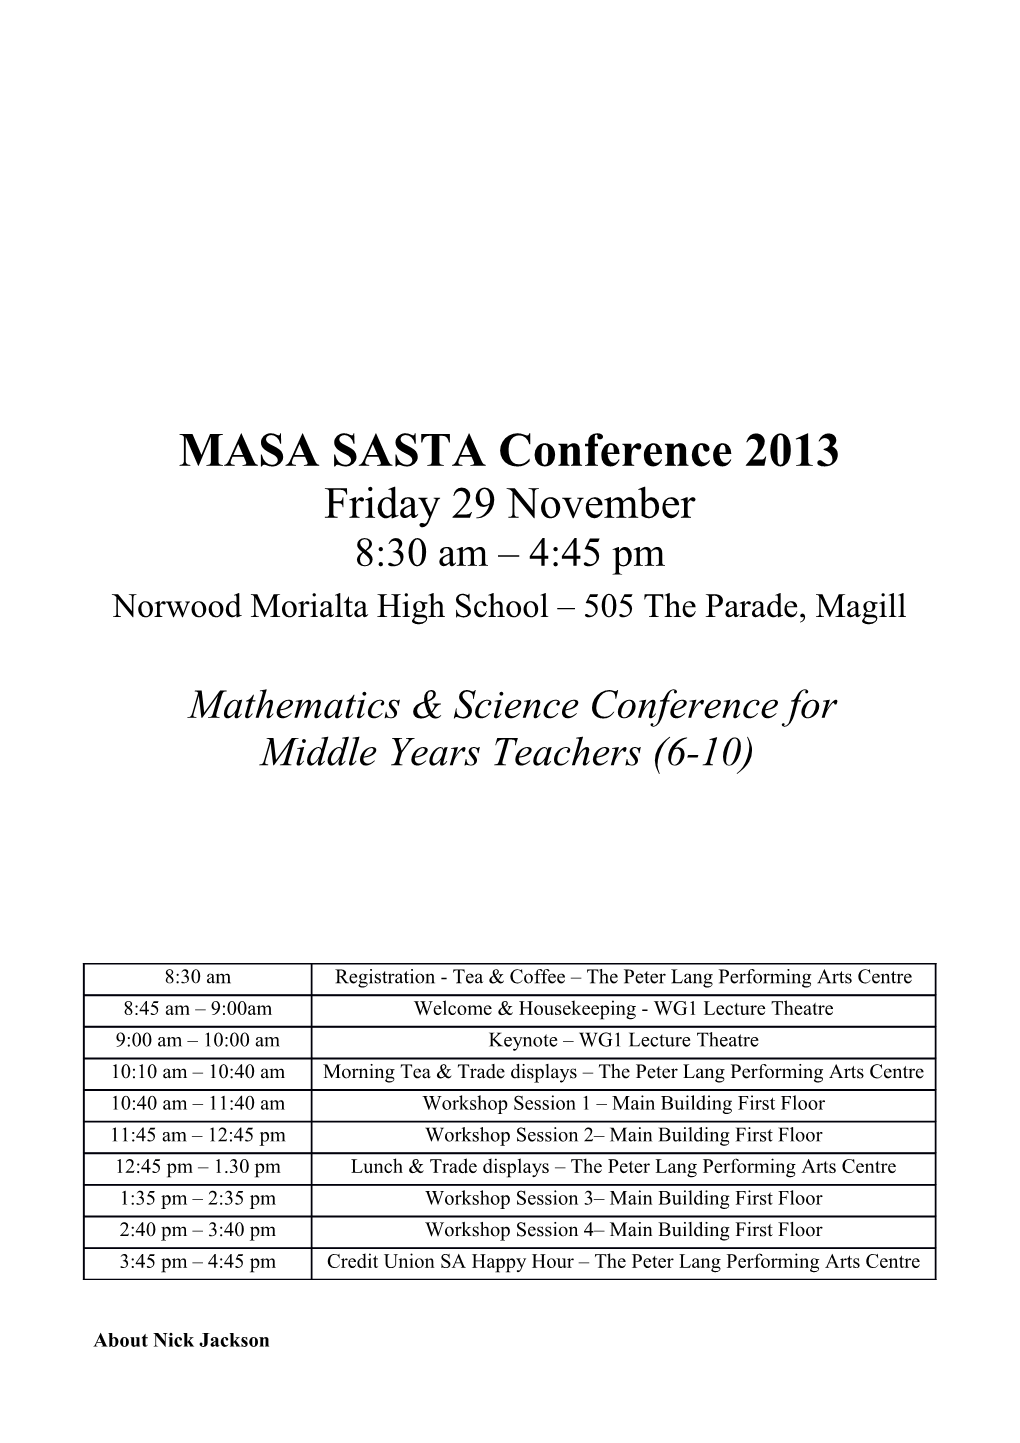 MASA Conference 2005 Proposed Program